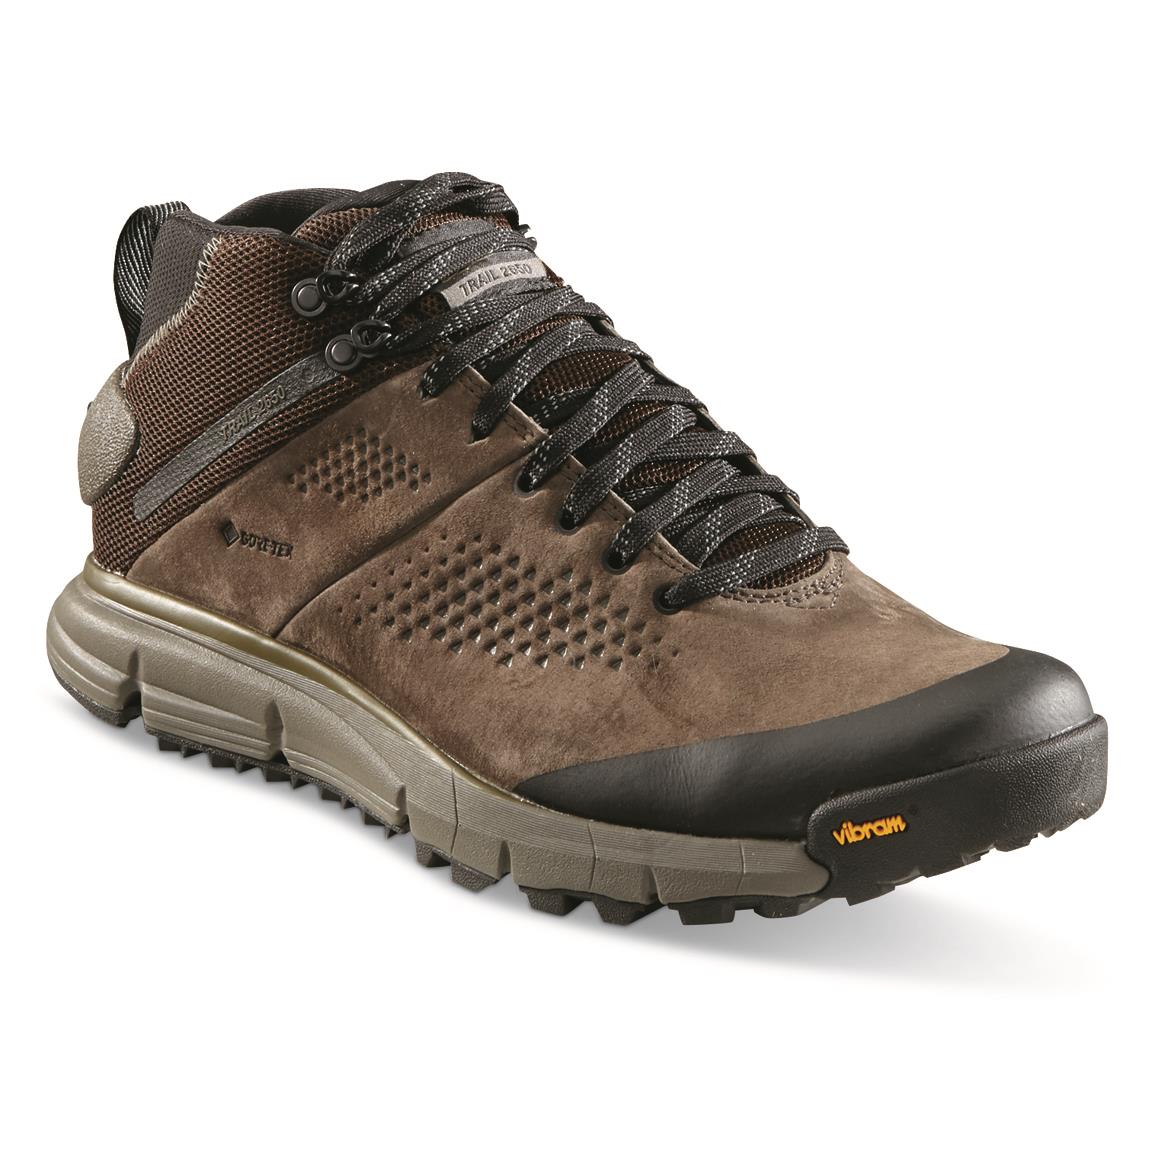 Danner Men's Trail 2650 GTX Waterproof Hiking Boots, Brown/military Green